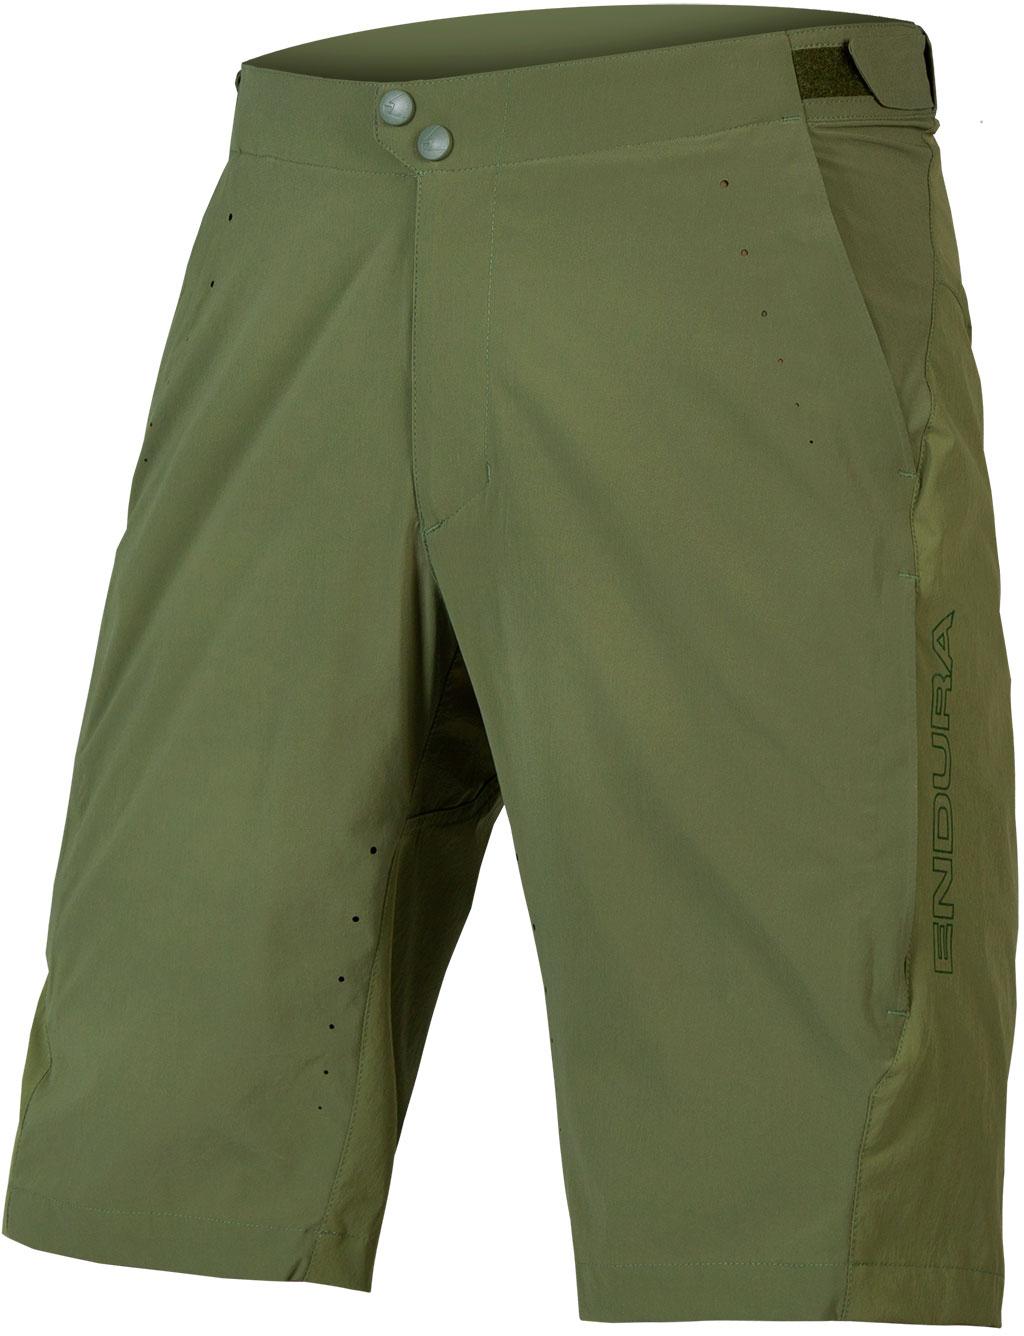 Endura Gv500 Foyle Shorts - Olive Green